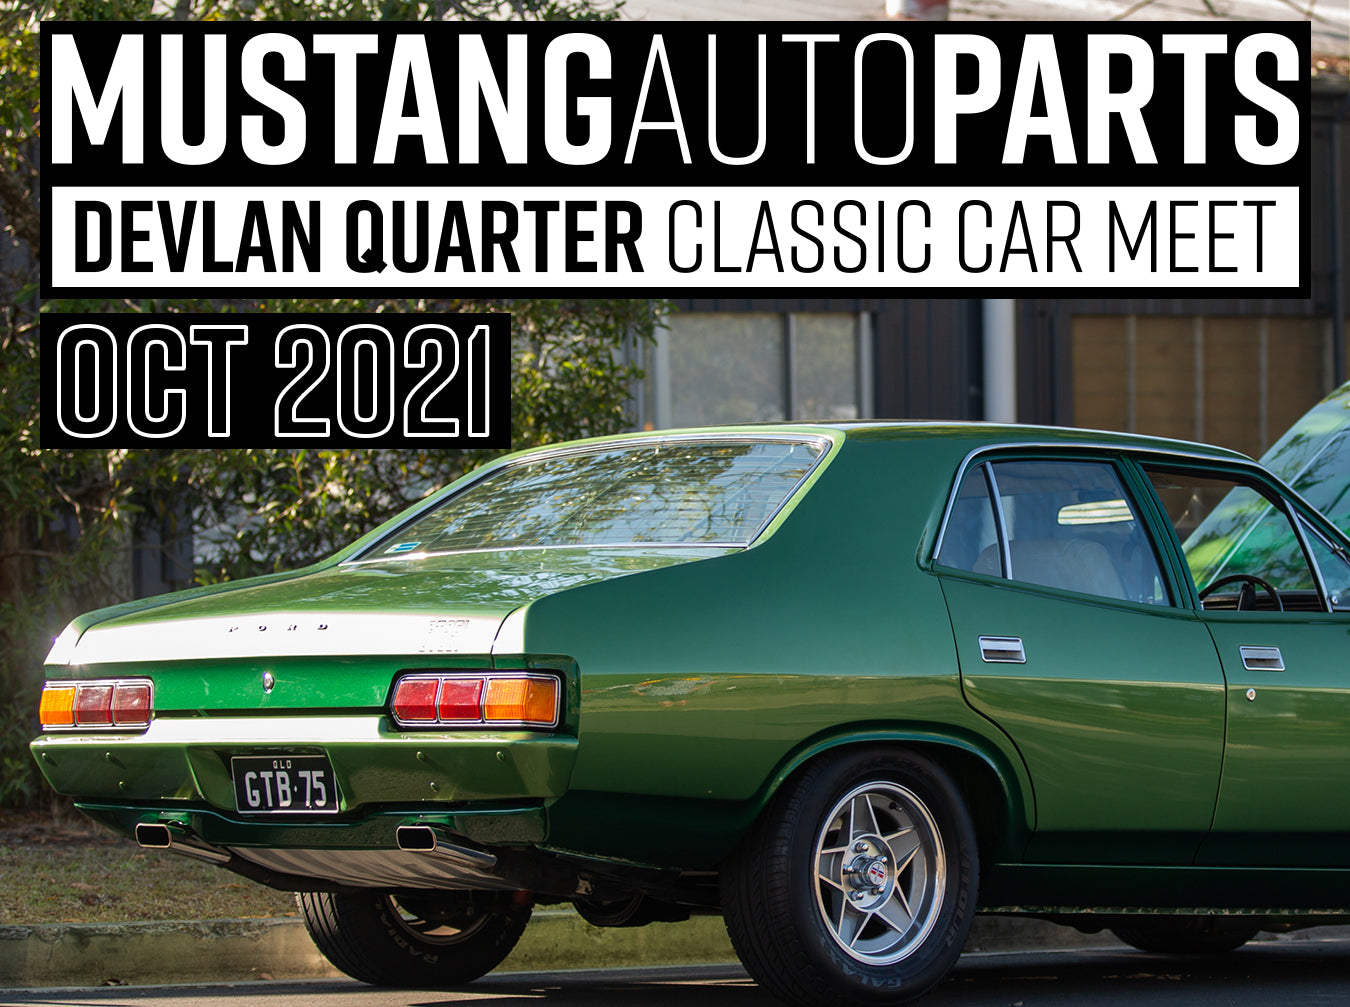 Devlan Quarter Classic Car Meet - October 2021